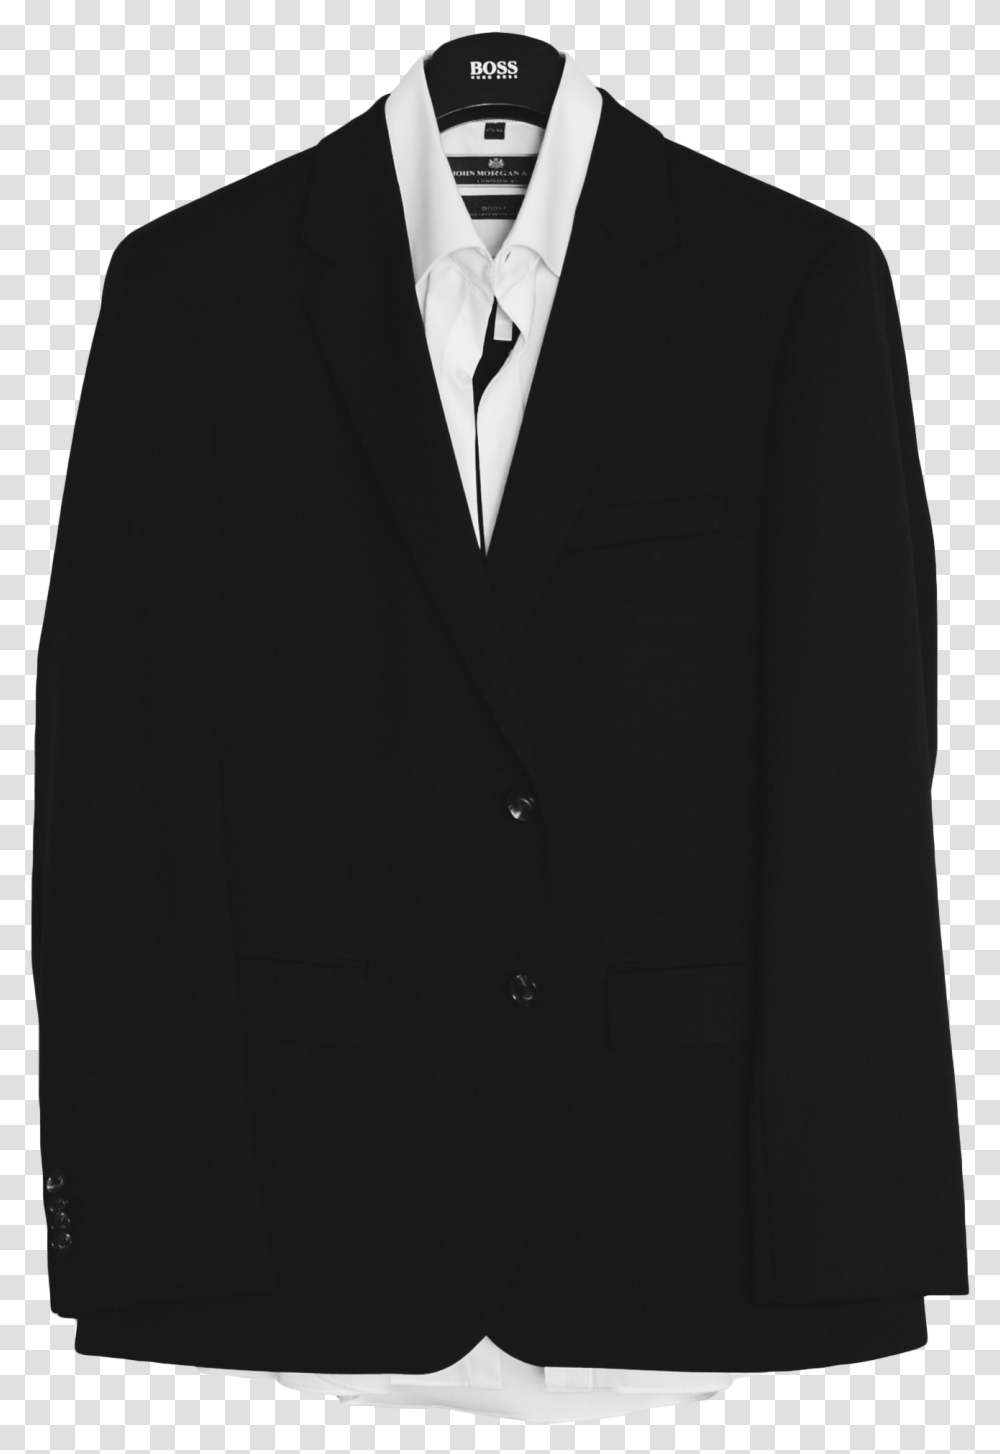 Black Suit Background Free Hanged Jacket, Overcoat, Clothing, Apparel, Tuxedo Transparent Png